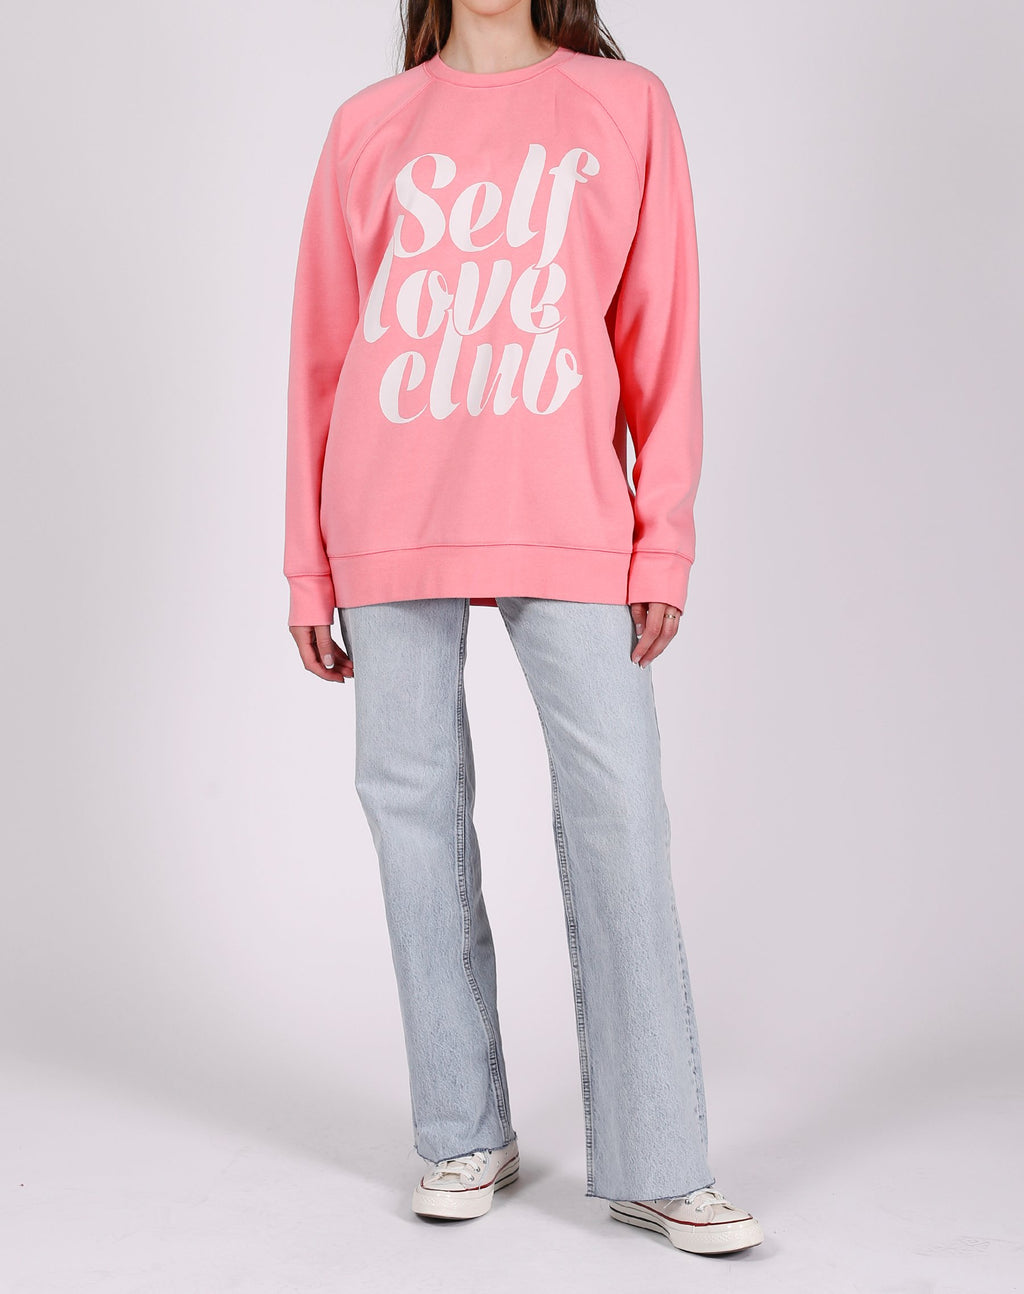 Brunette The Label x Benefit Cosmetics || The "SELF LOVE CLUB" Big Sister Crew Neck Sweatshirt